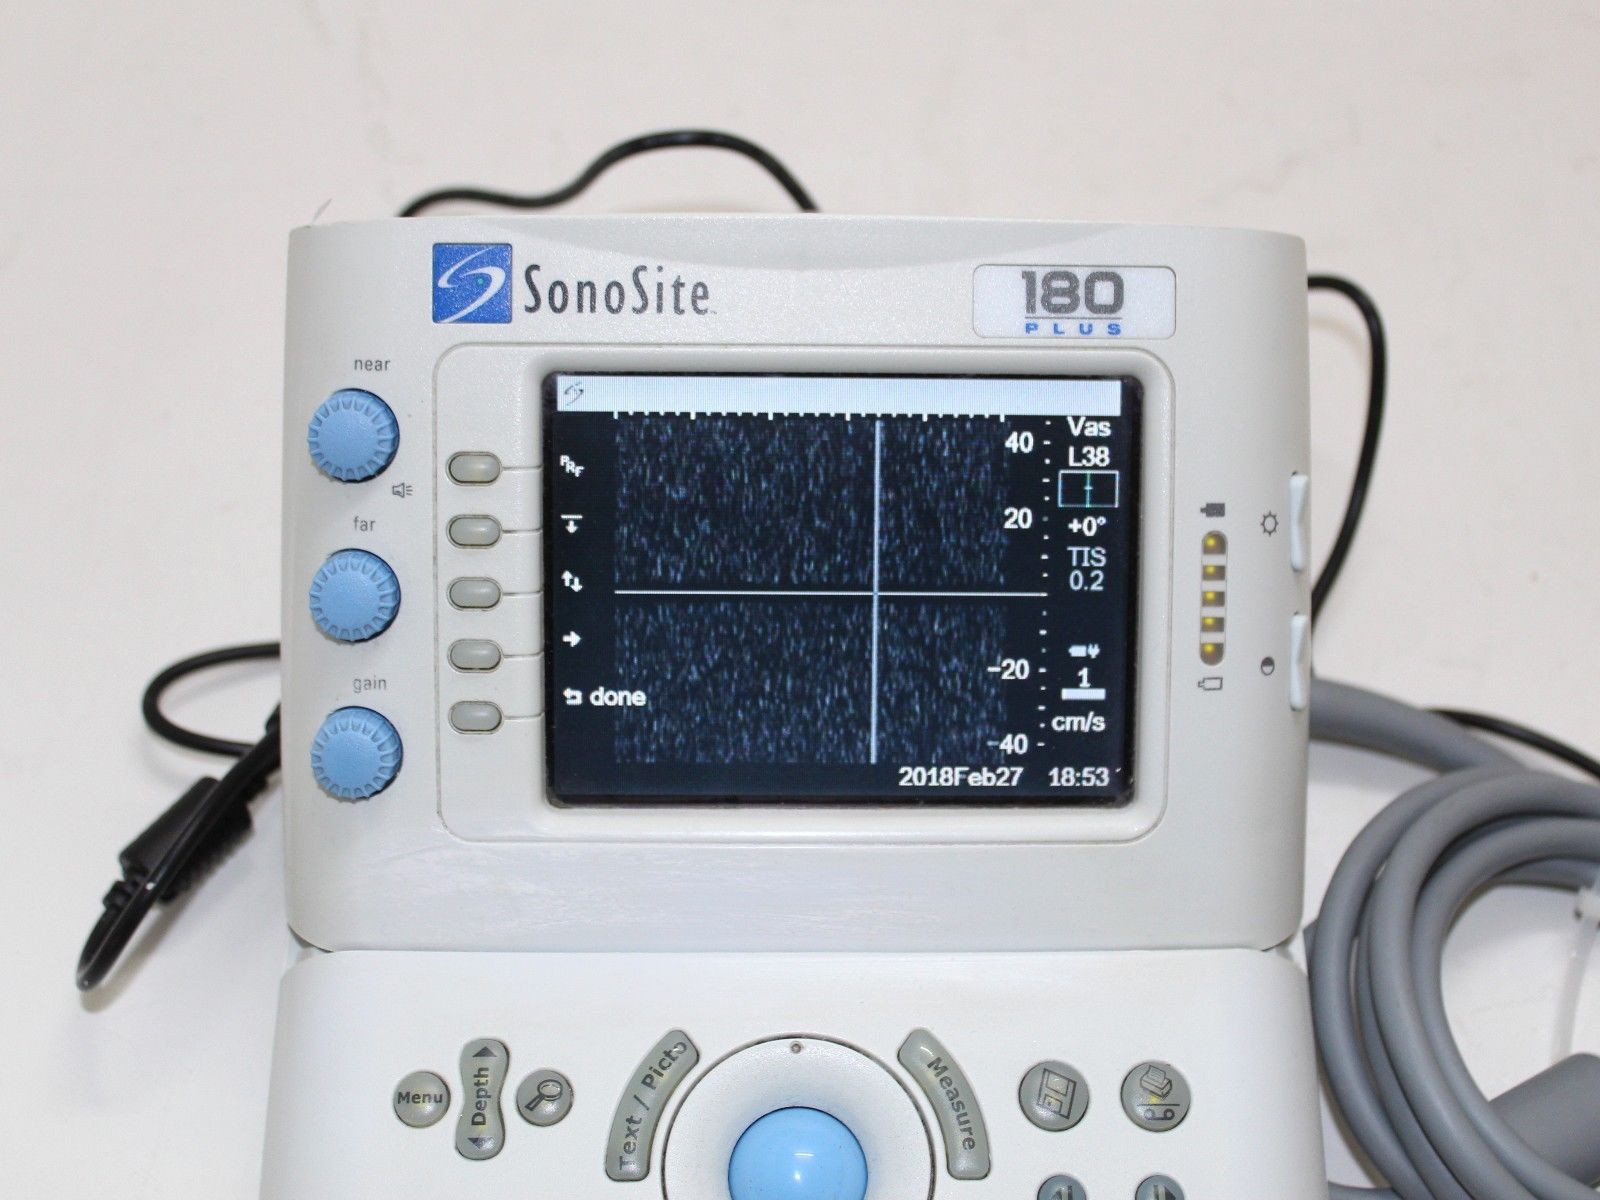 Sonosite 180 Plus Ultrasound with L38 10-5 Mhz probe DIAGNOSTIC ULTRASOUND MACHINES FOR SALE